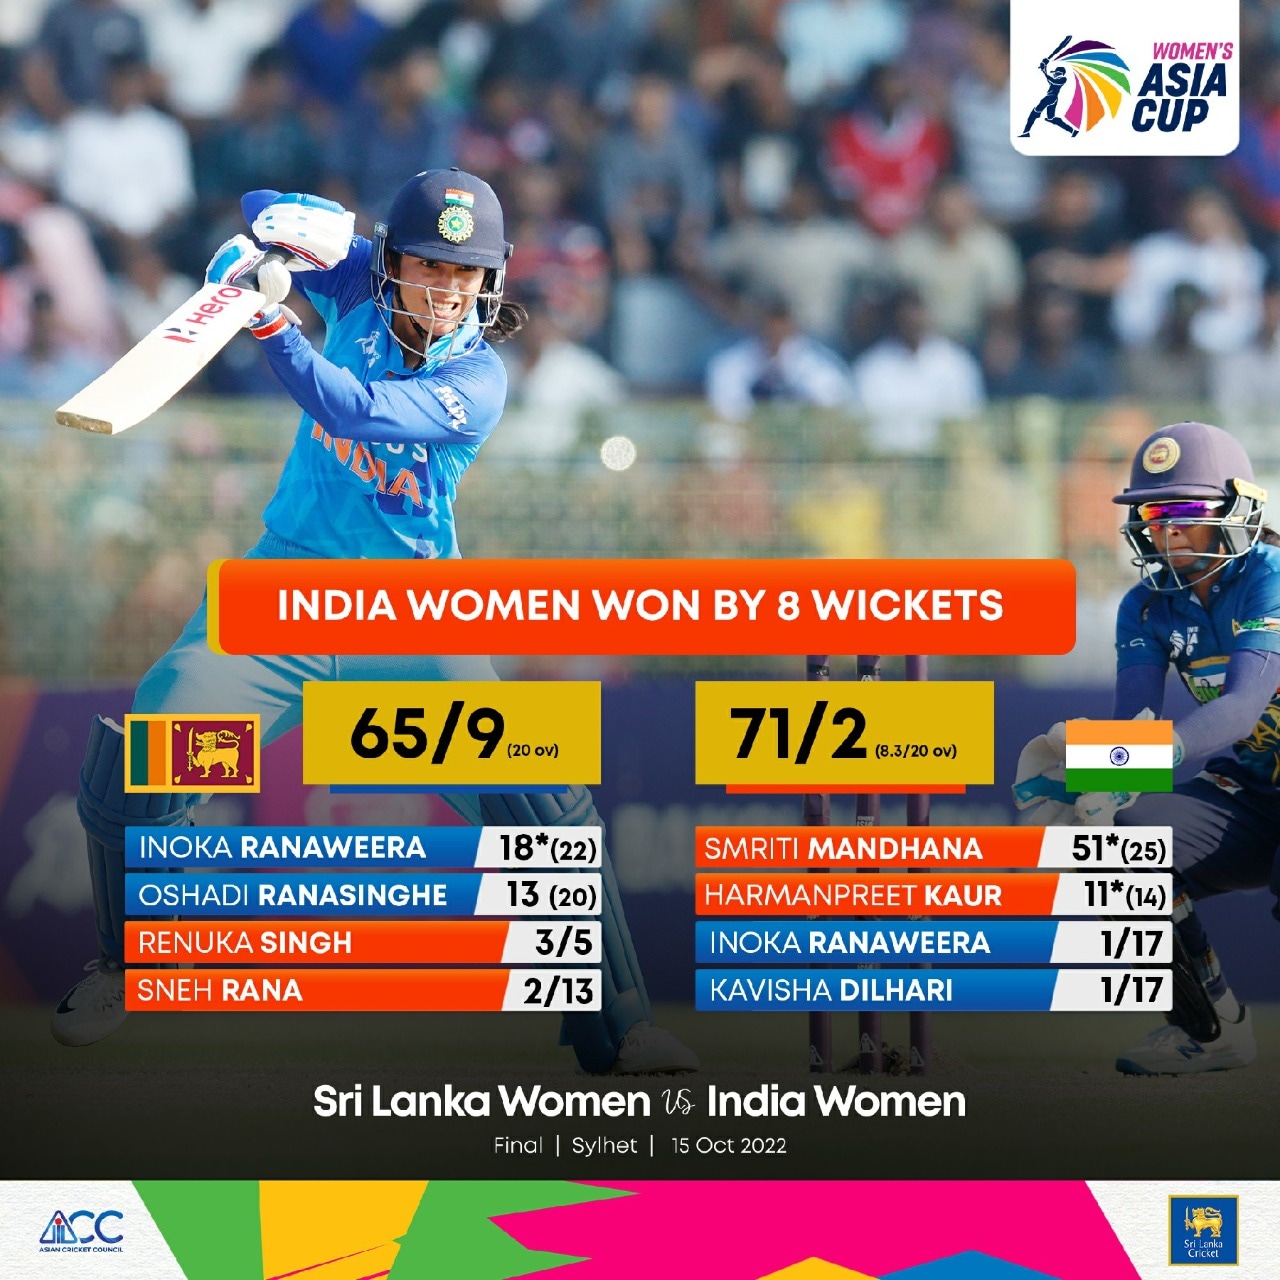 Sri Lanka Women lose to India Women by 8 wkts in Asia Cup final